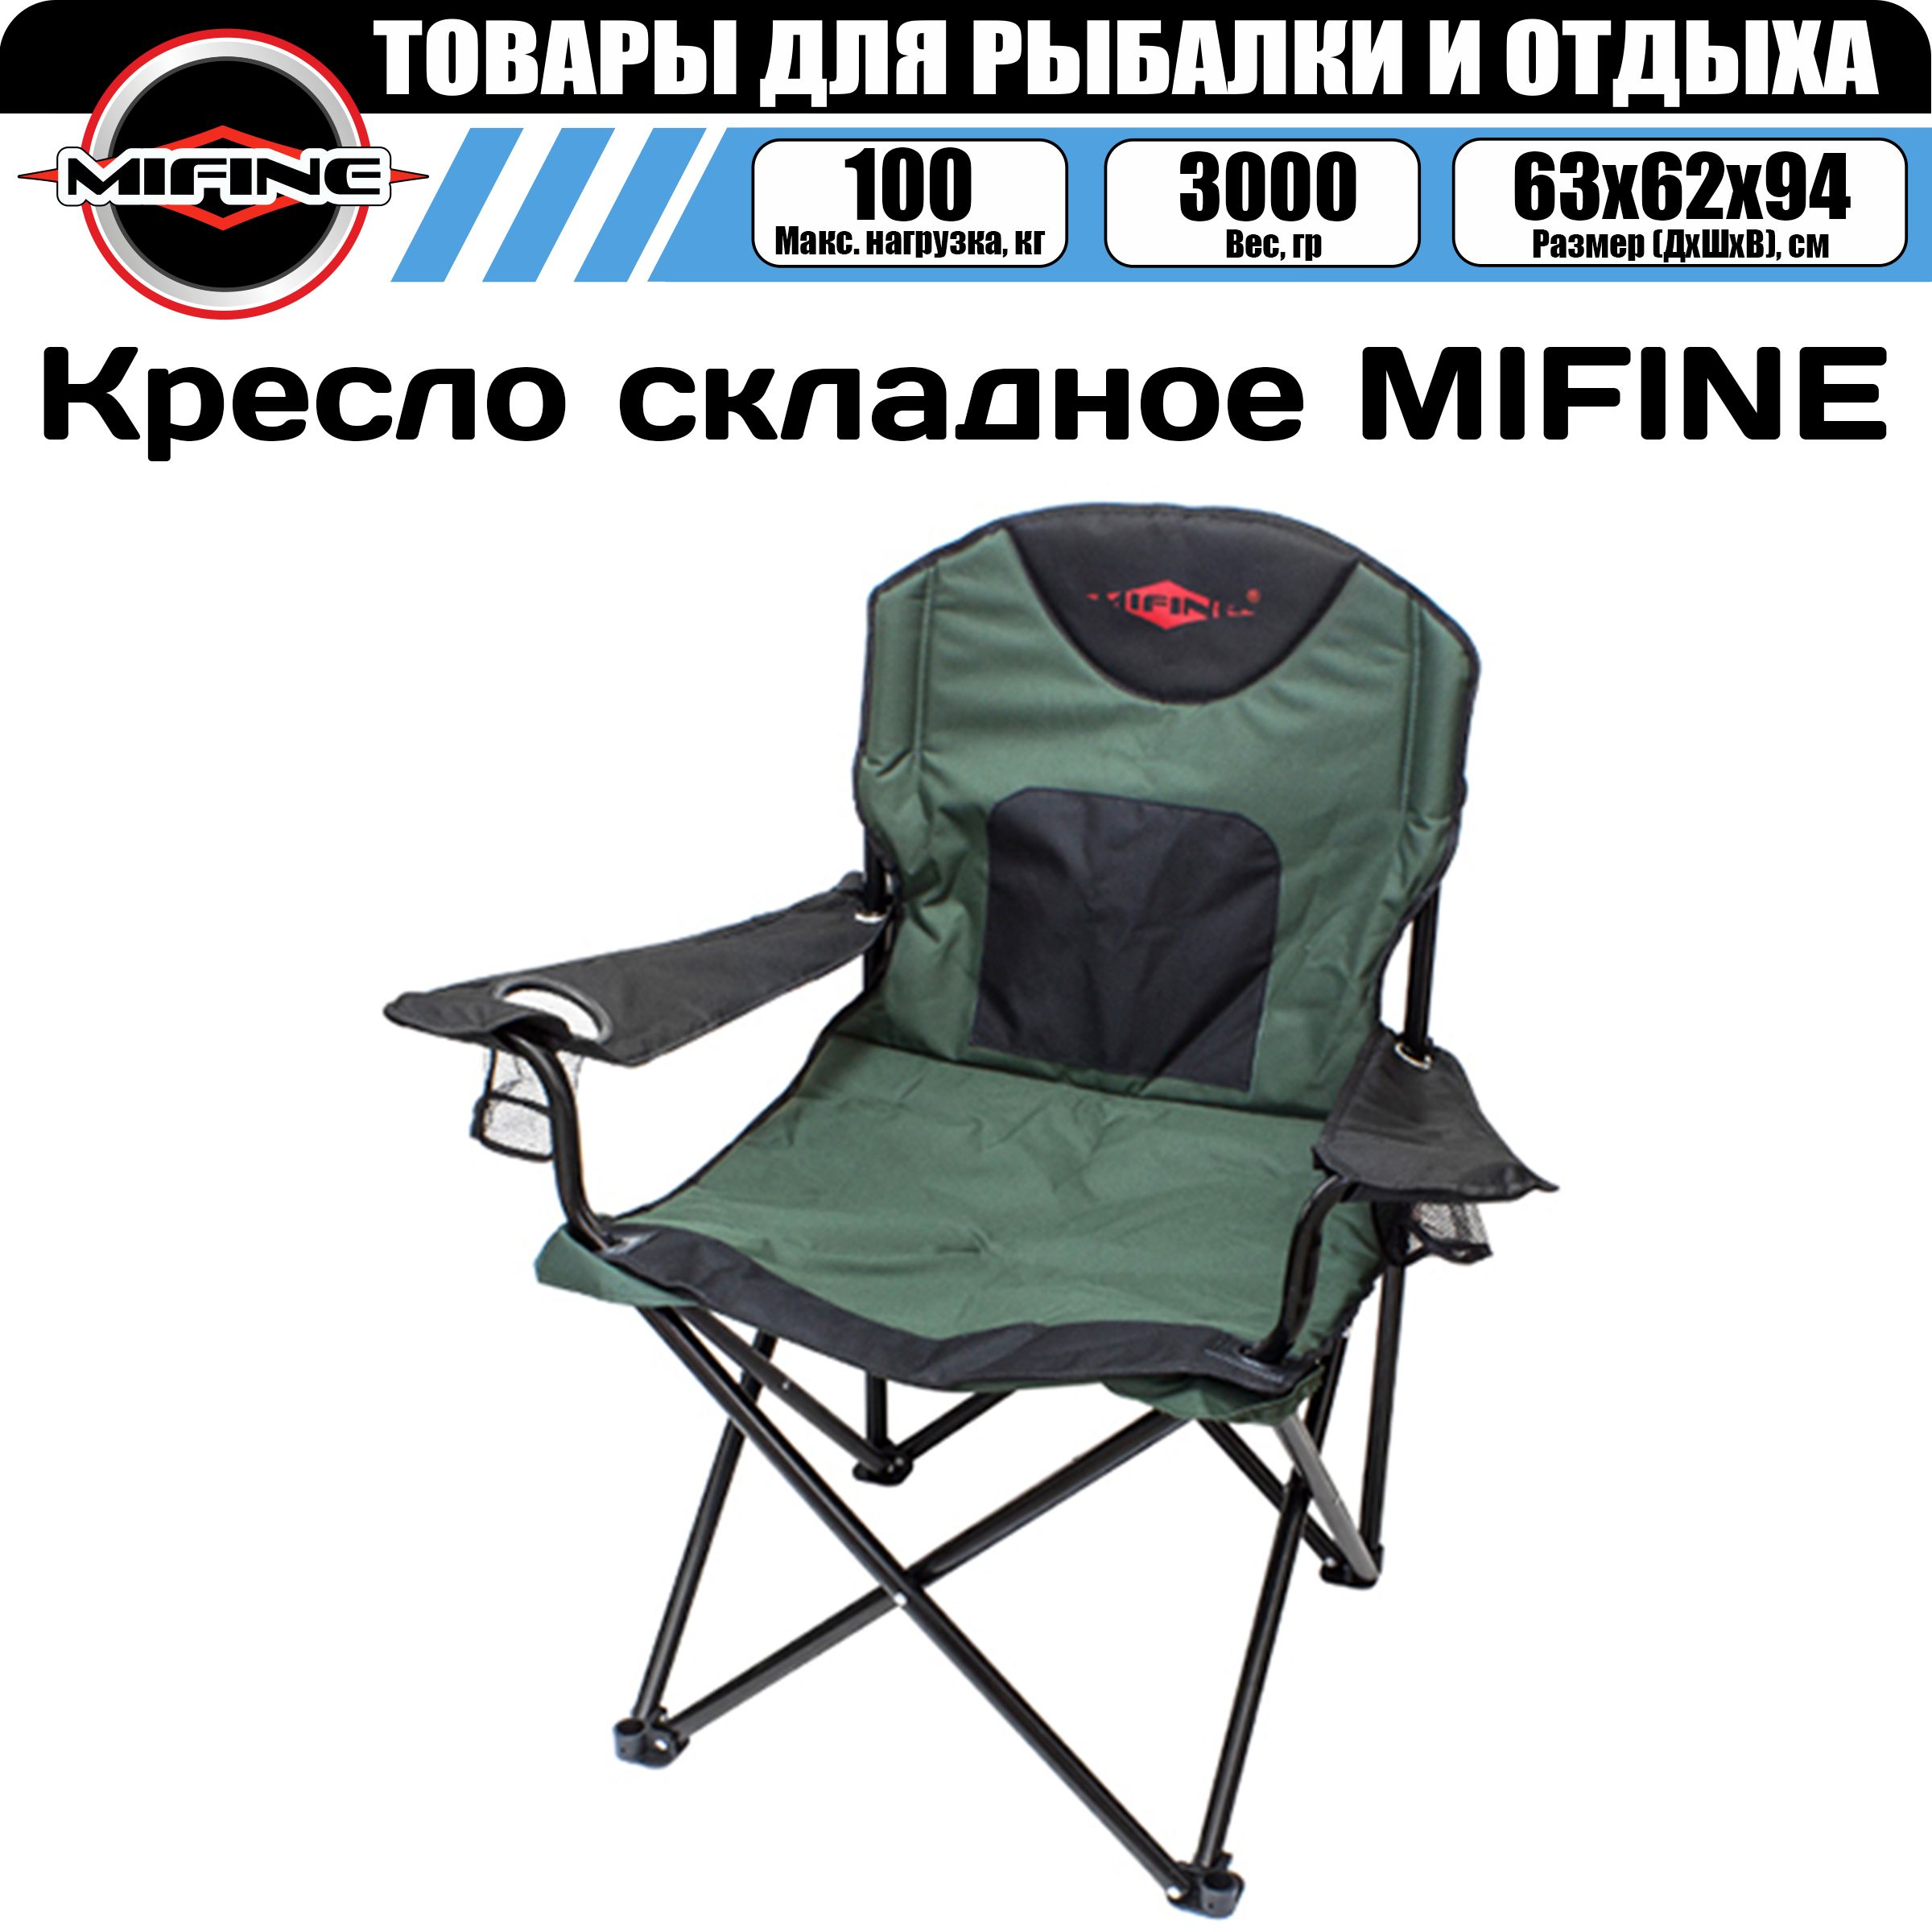 Кресло складное Mifine 55052a